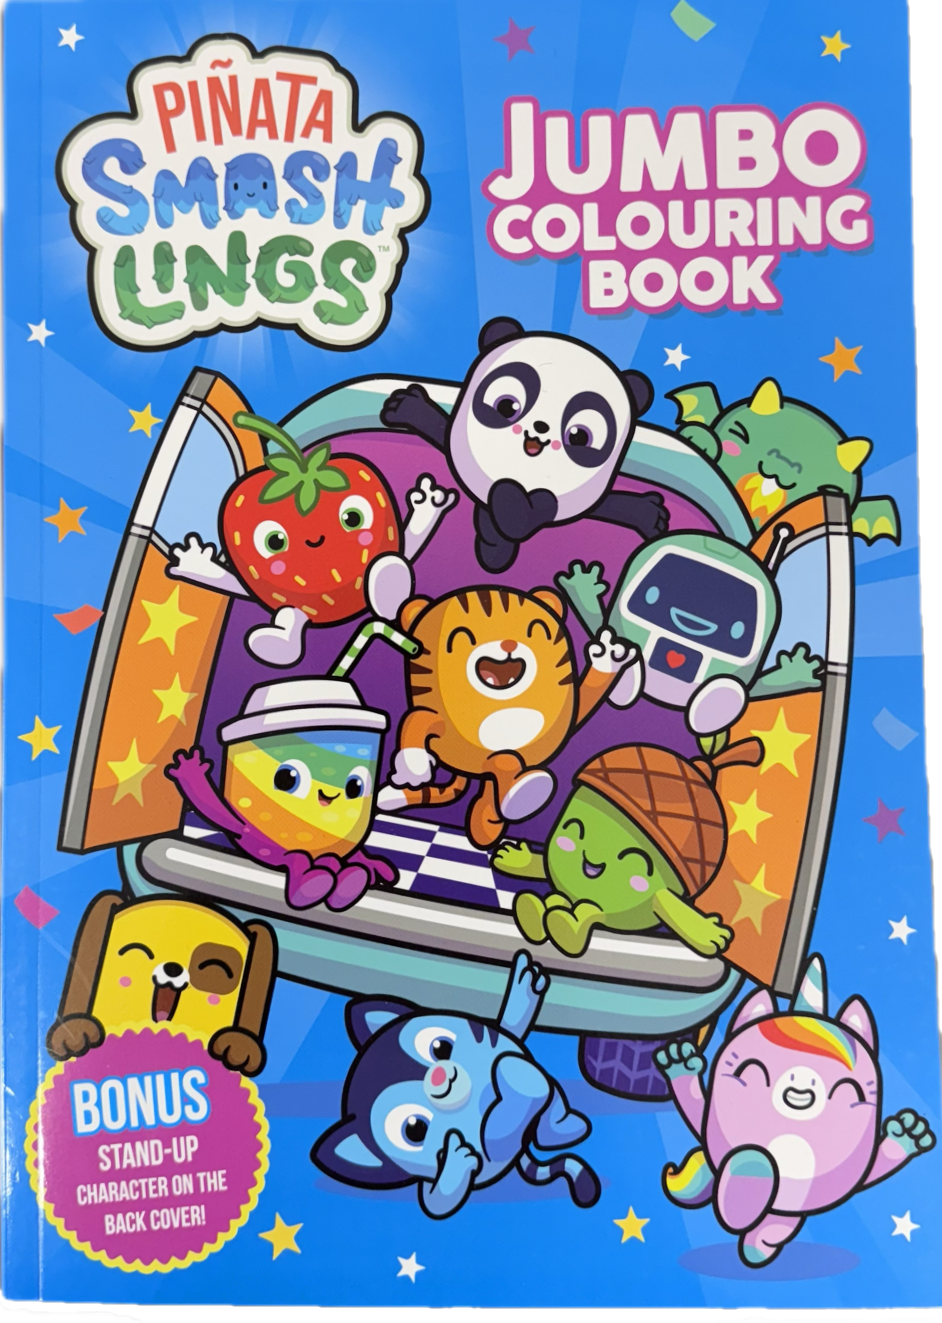 Piñata Smashlings Jumbo Colouring Book - Anilas UK